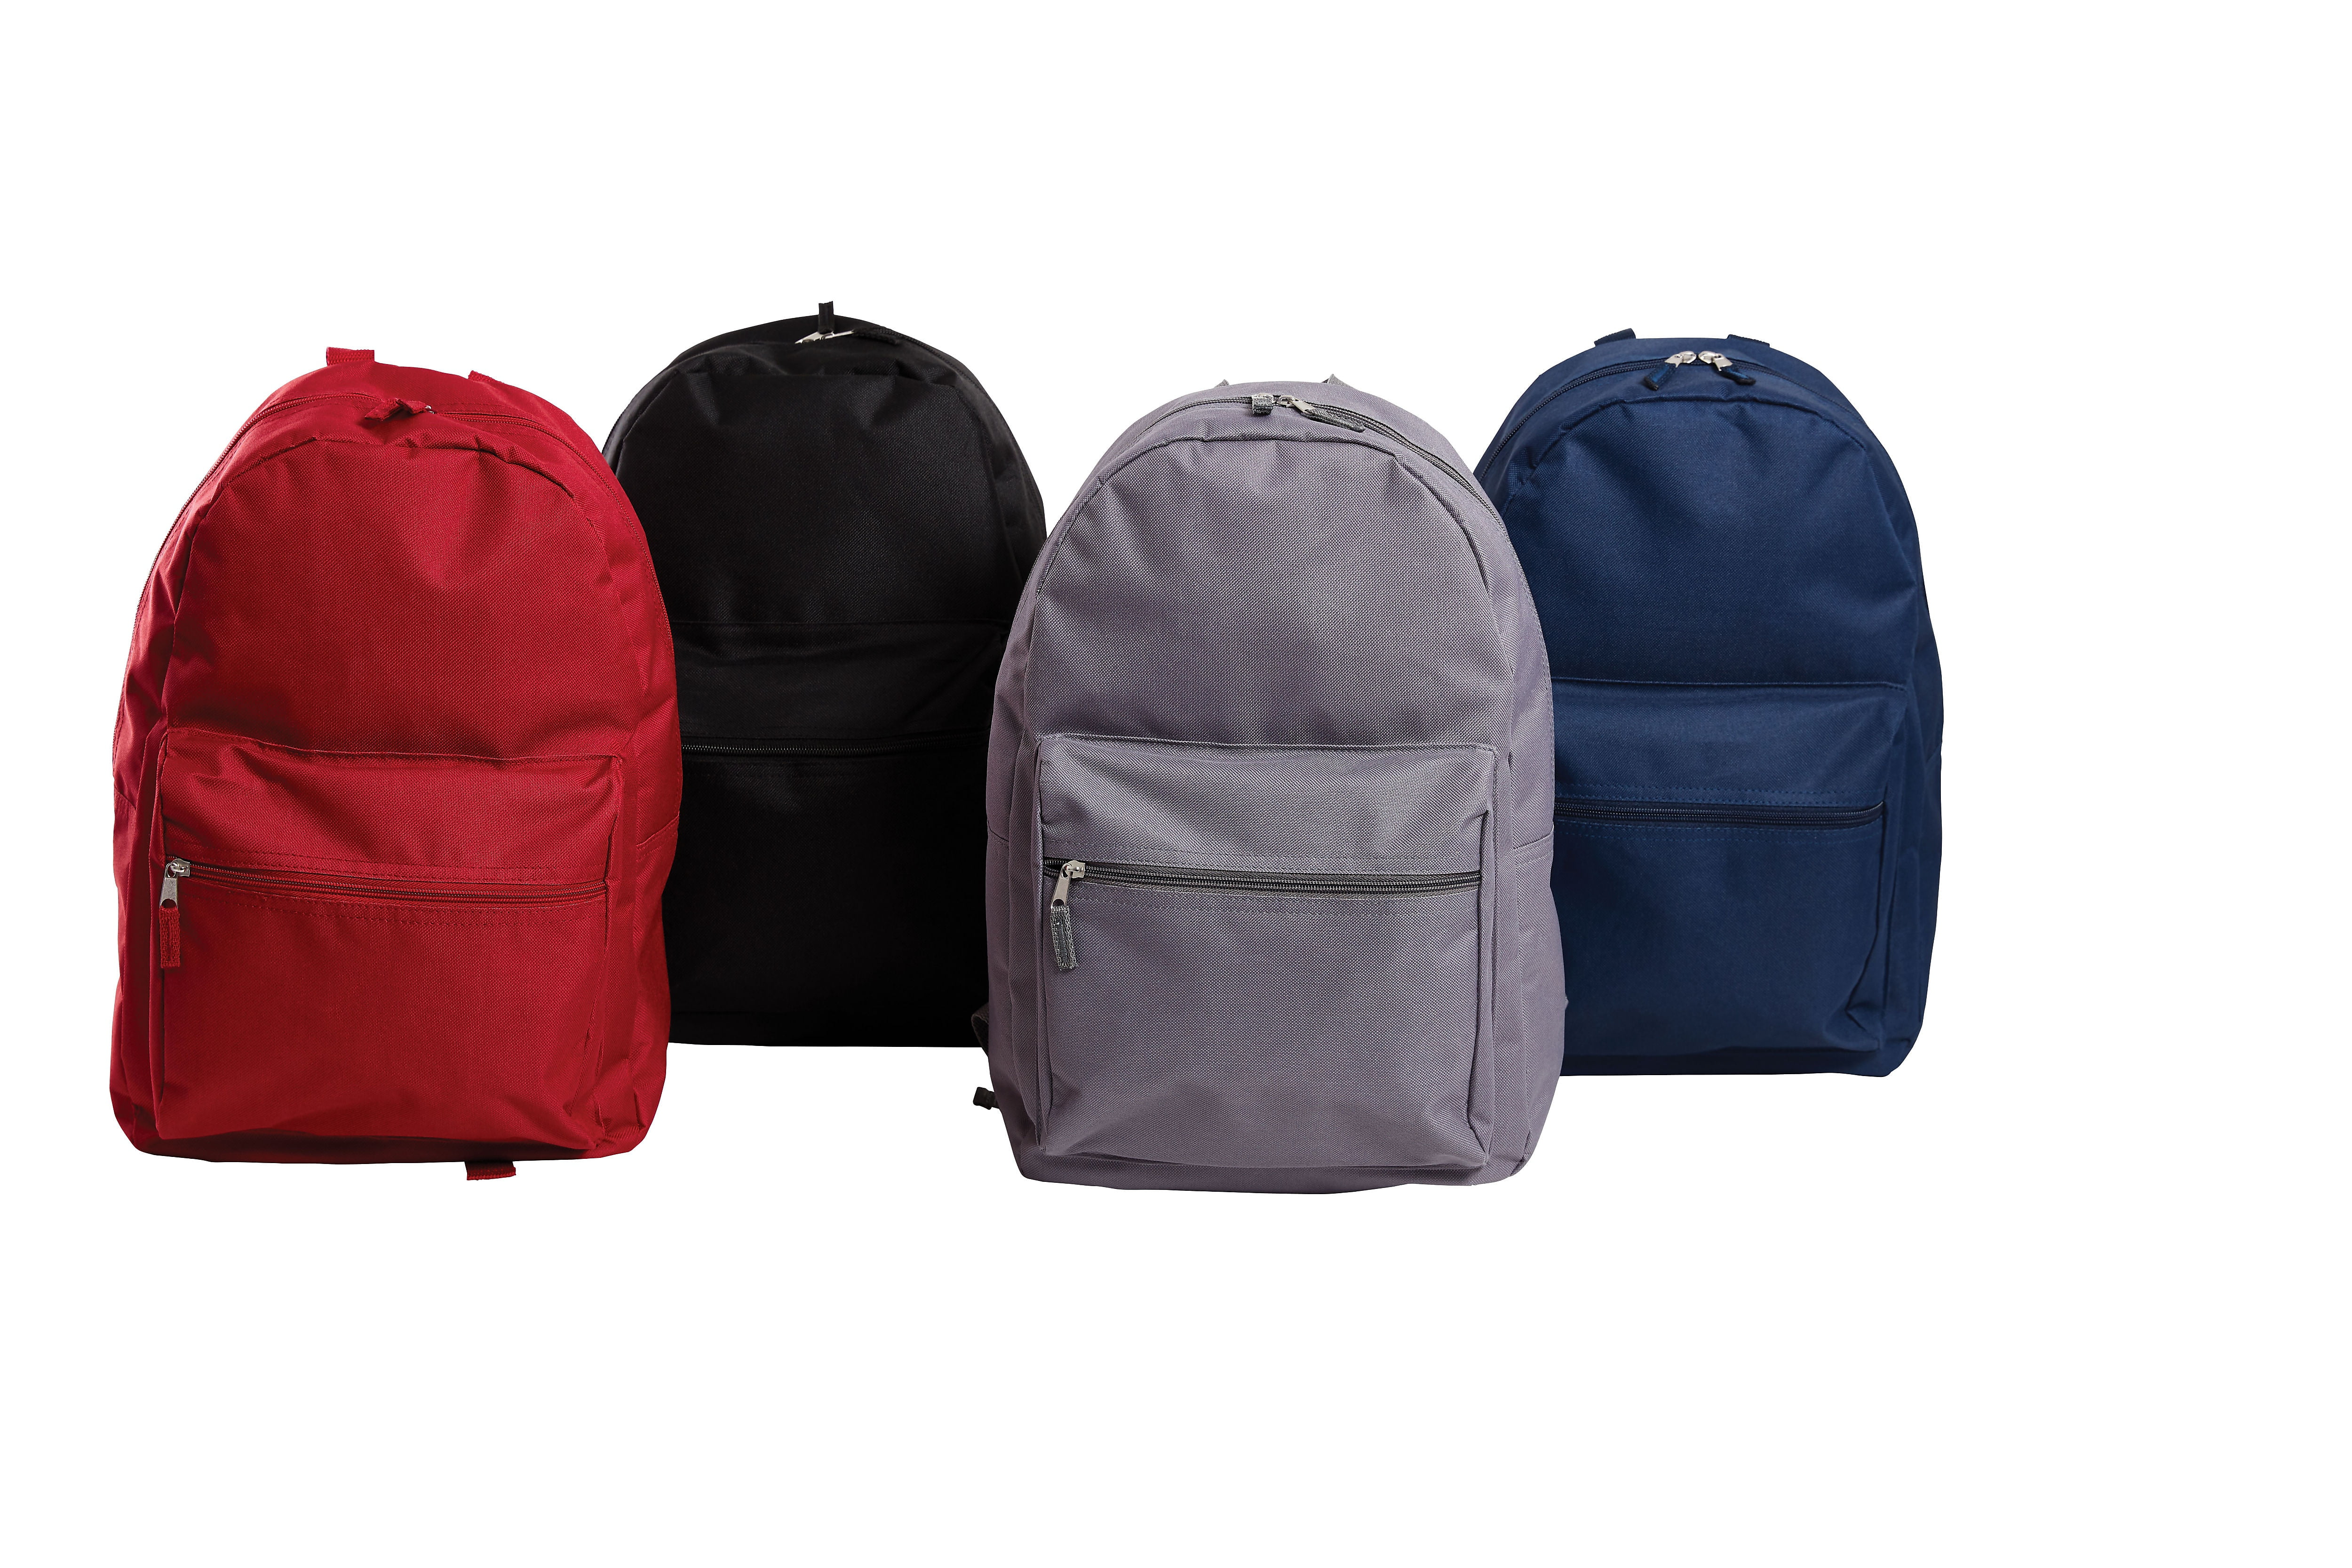 Staples - Staples 17 Assorted Backpacks, Case of 40 51865 - Walmart.com ...